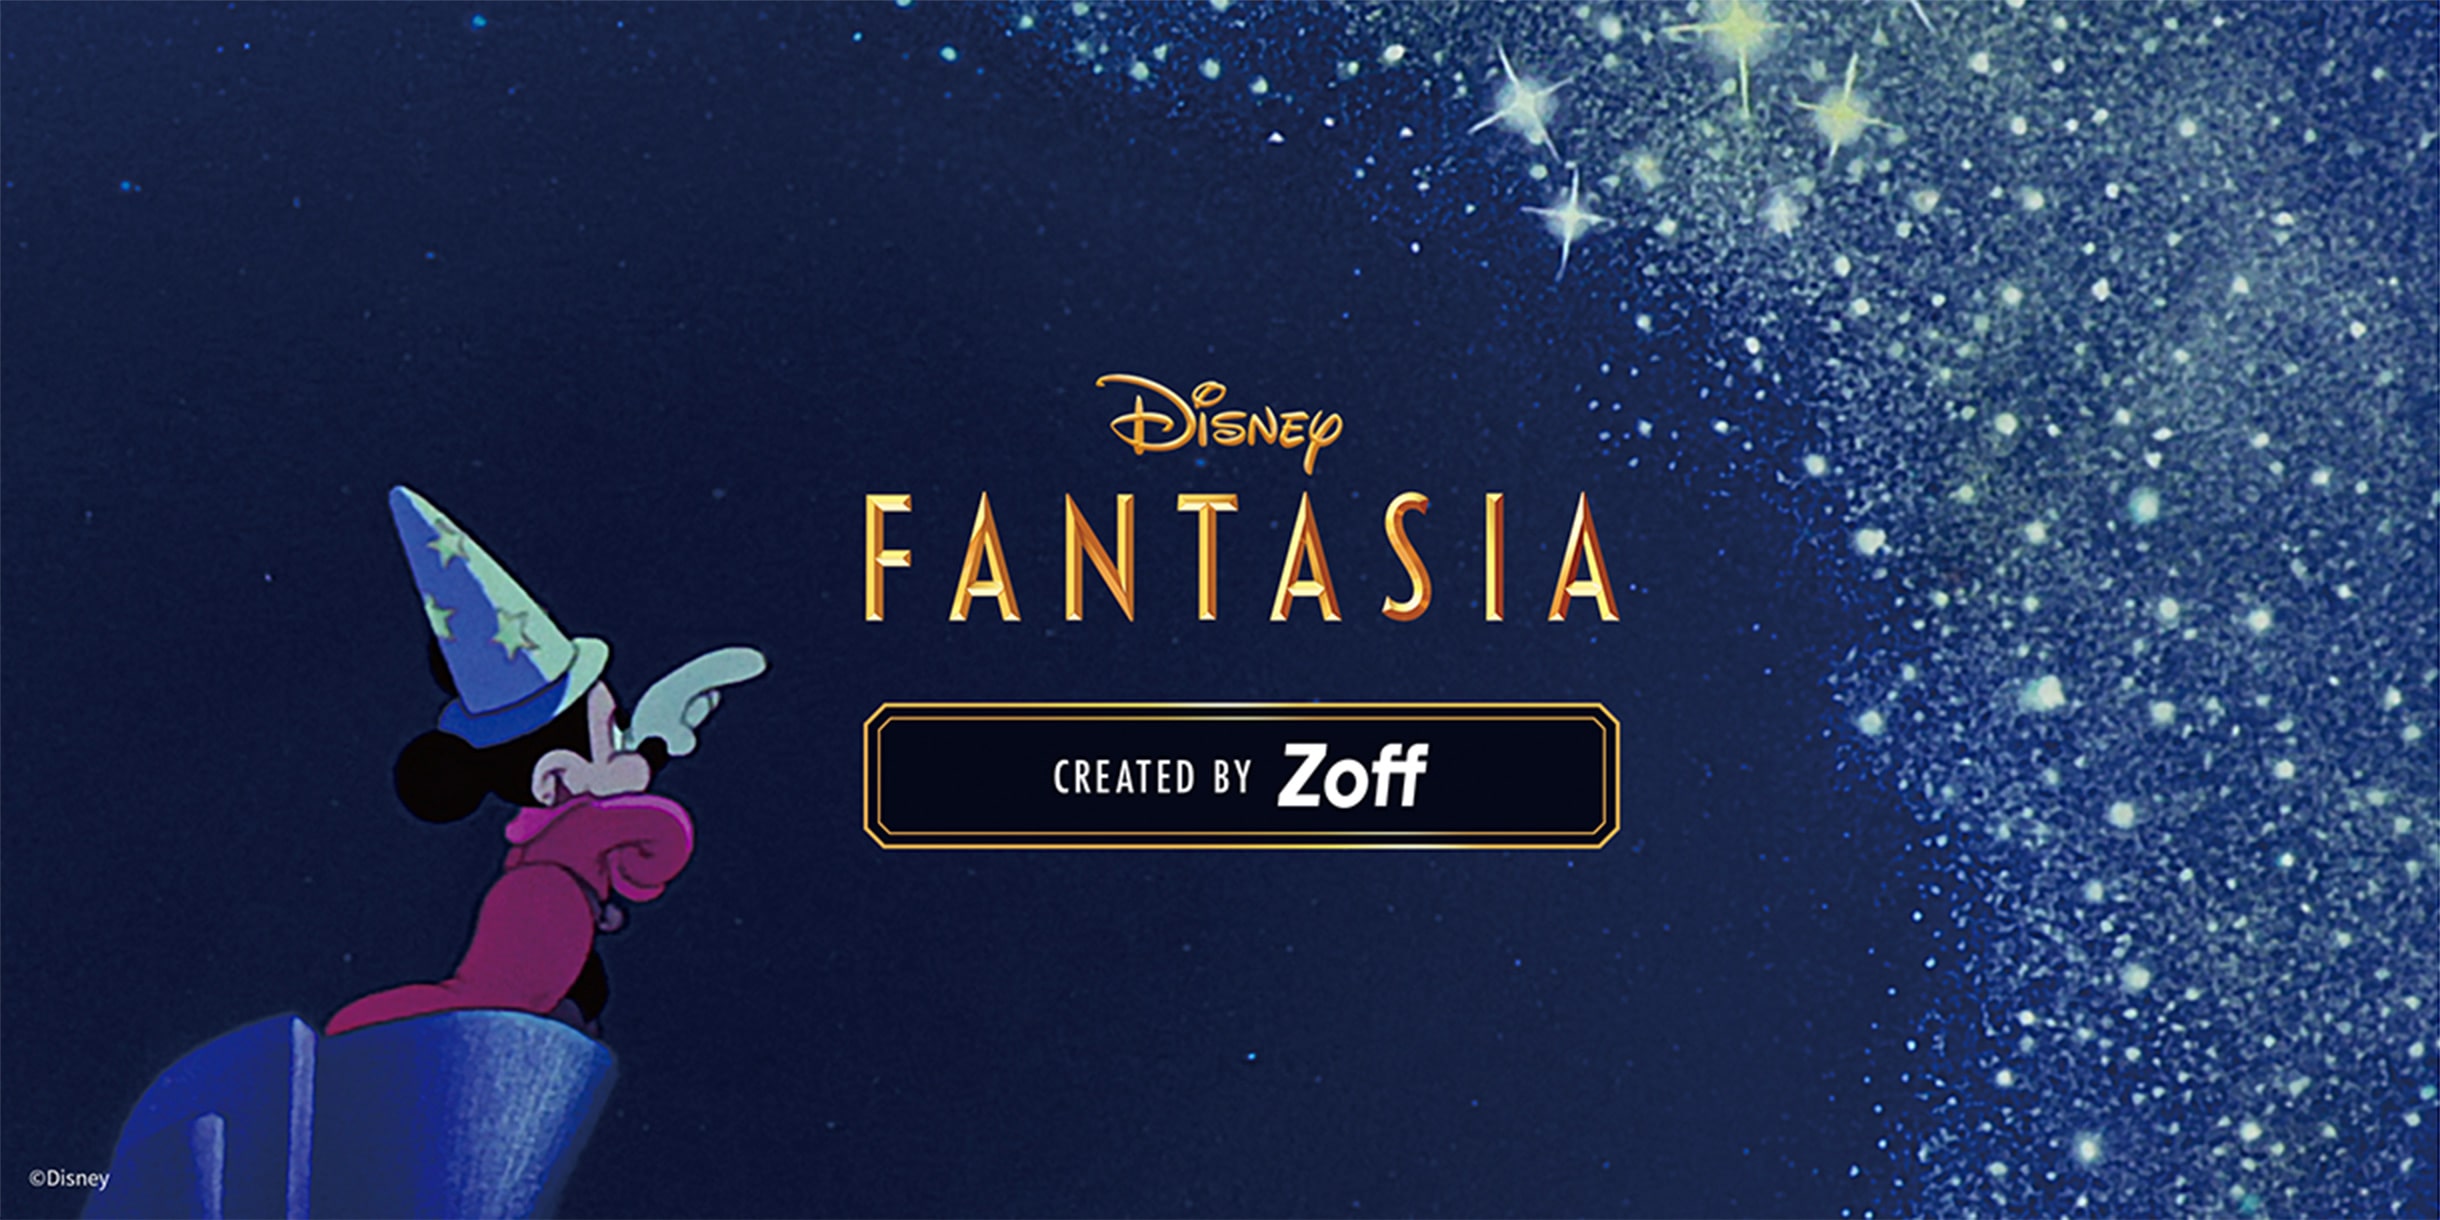 Disney FANTASIA CREATED BY Zoff